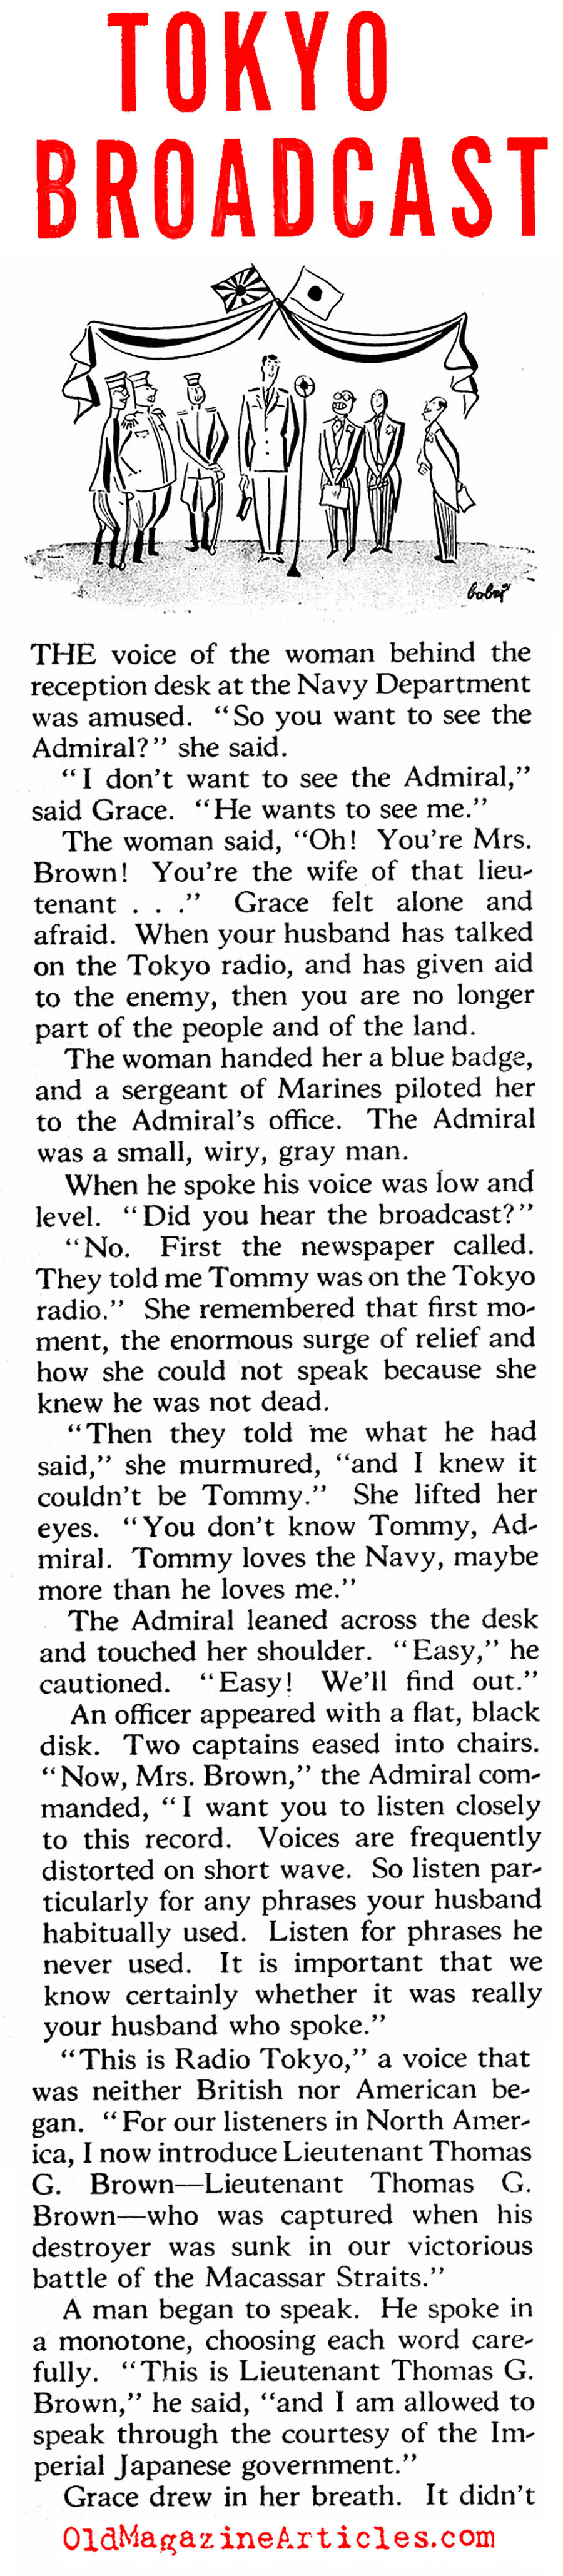 An American POW On Radio Tokyo (American Magazine, 1942)